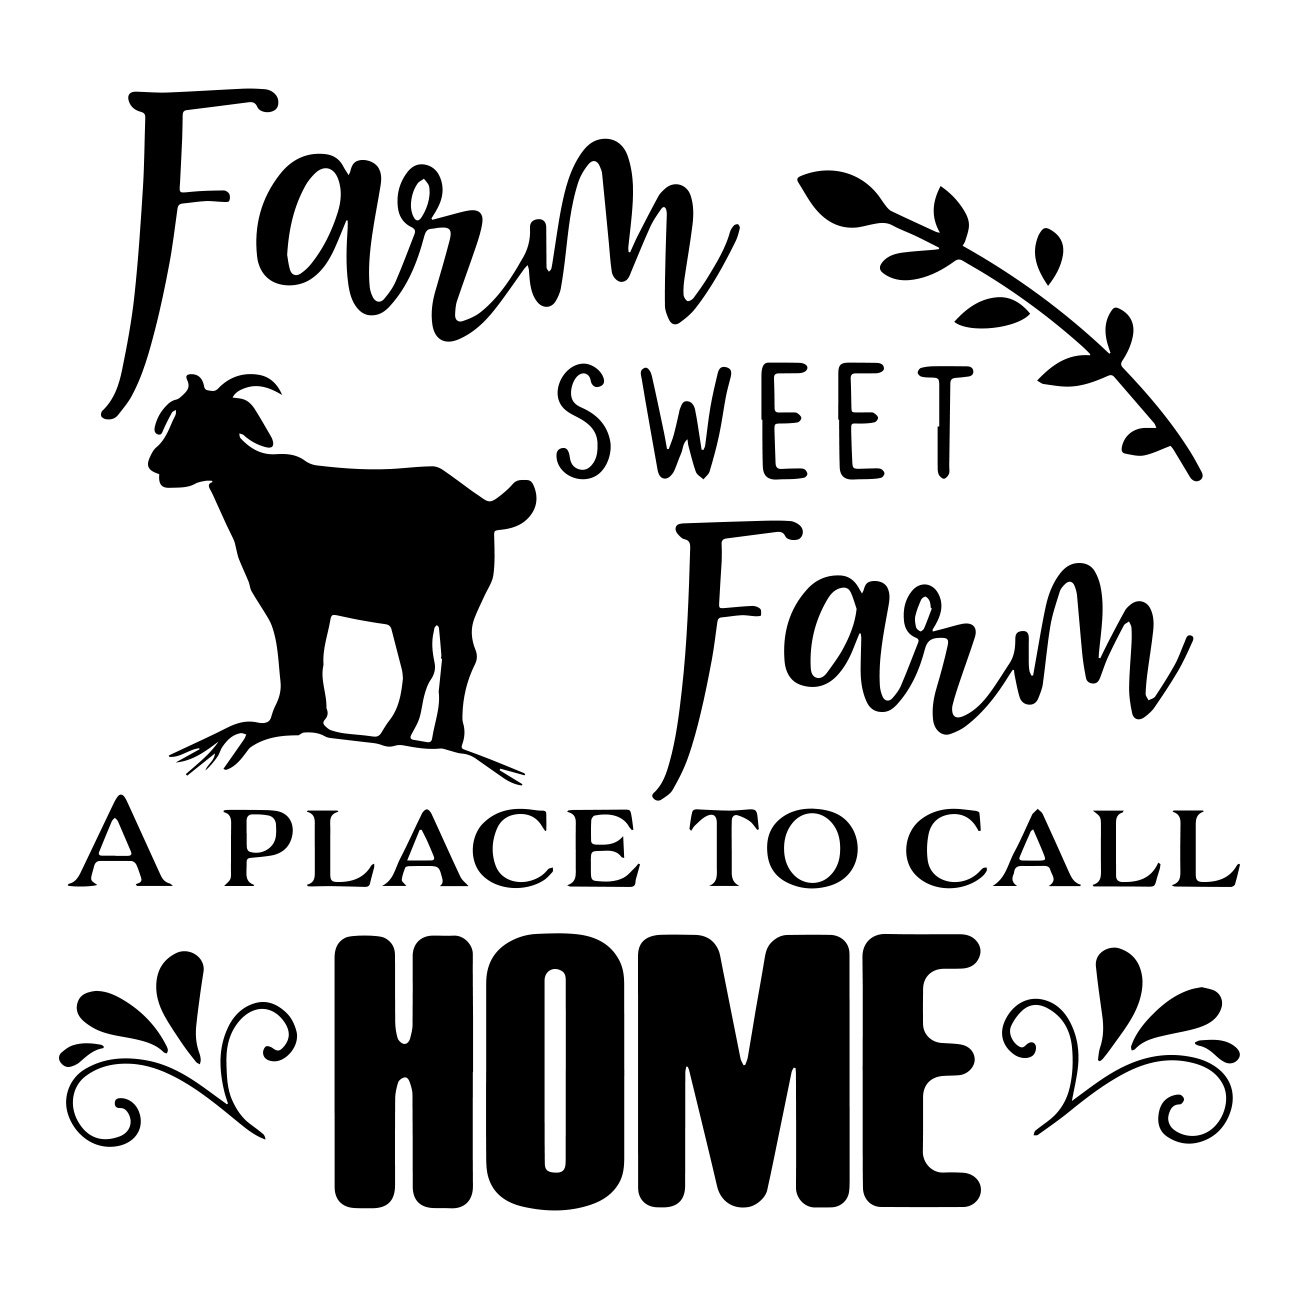 farm sweet farm a place to call home